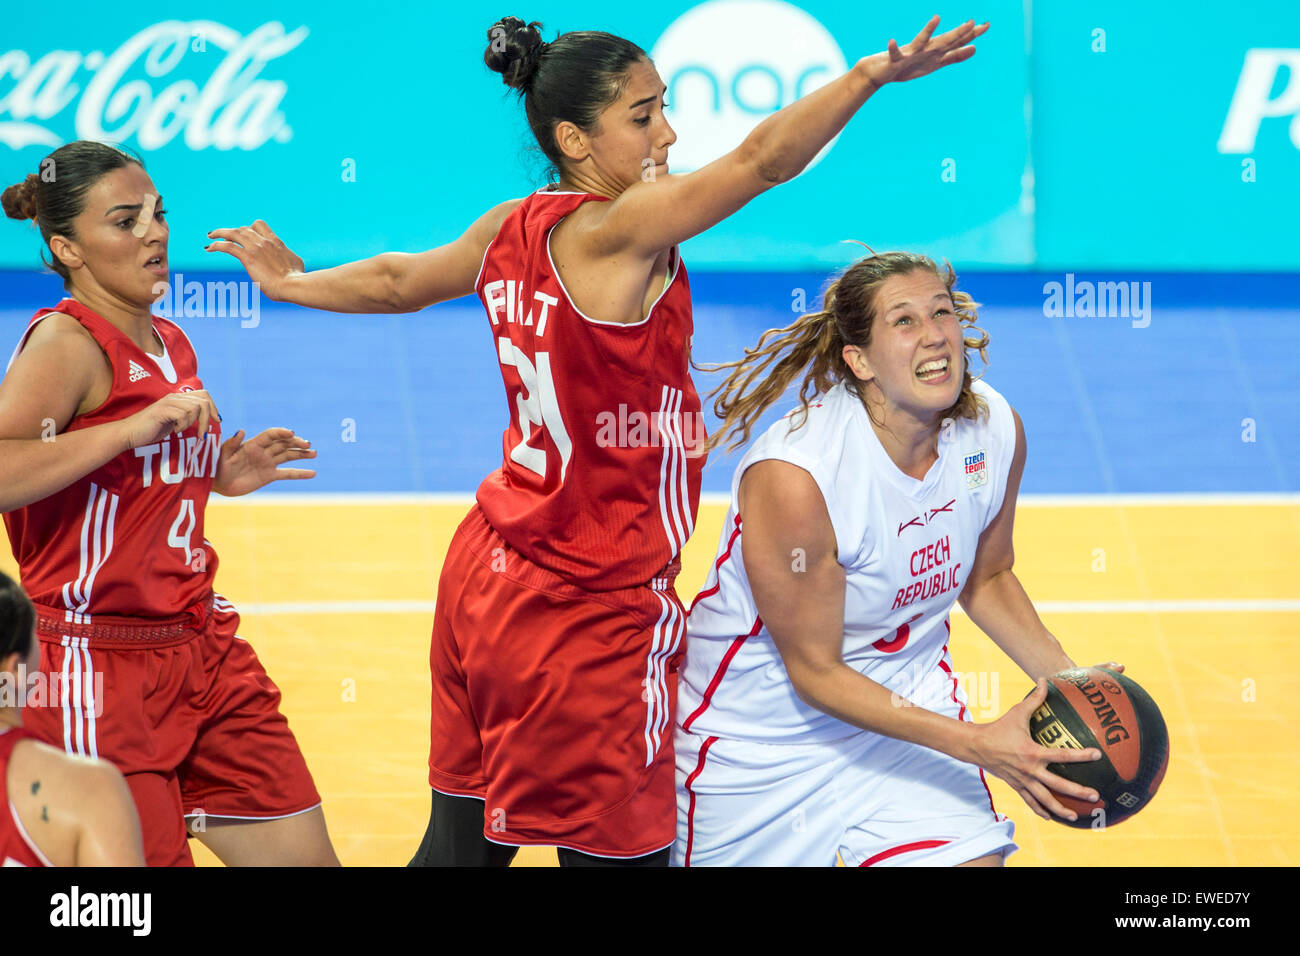 From left: Nihan Demirkol (TUR), Duygu Firat (TUR) and Tereza Vorlova (CZE)  in action during the Women's 3x3 Basketball match, Group B, Turkey vs Czech  Republic at the Baku 2015 1st European